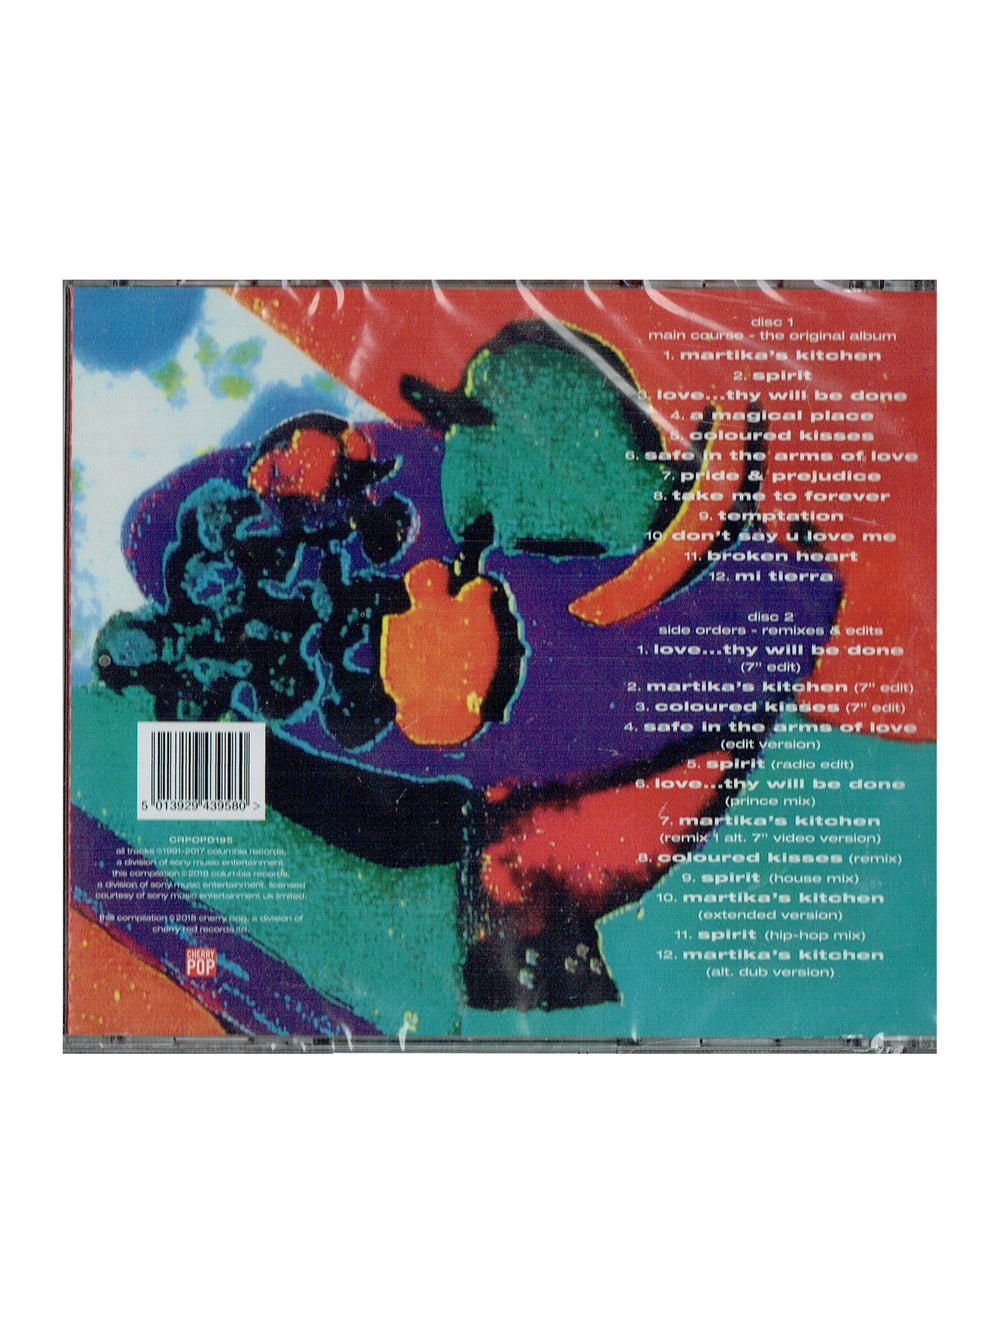 Martika Martika's Kitchen Re Heated  2 CD Album Brand New Sealed Prince